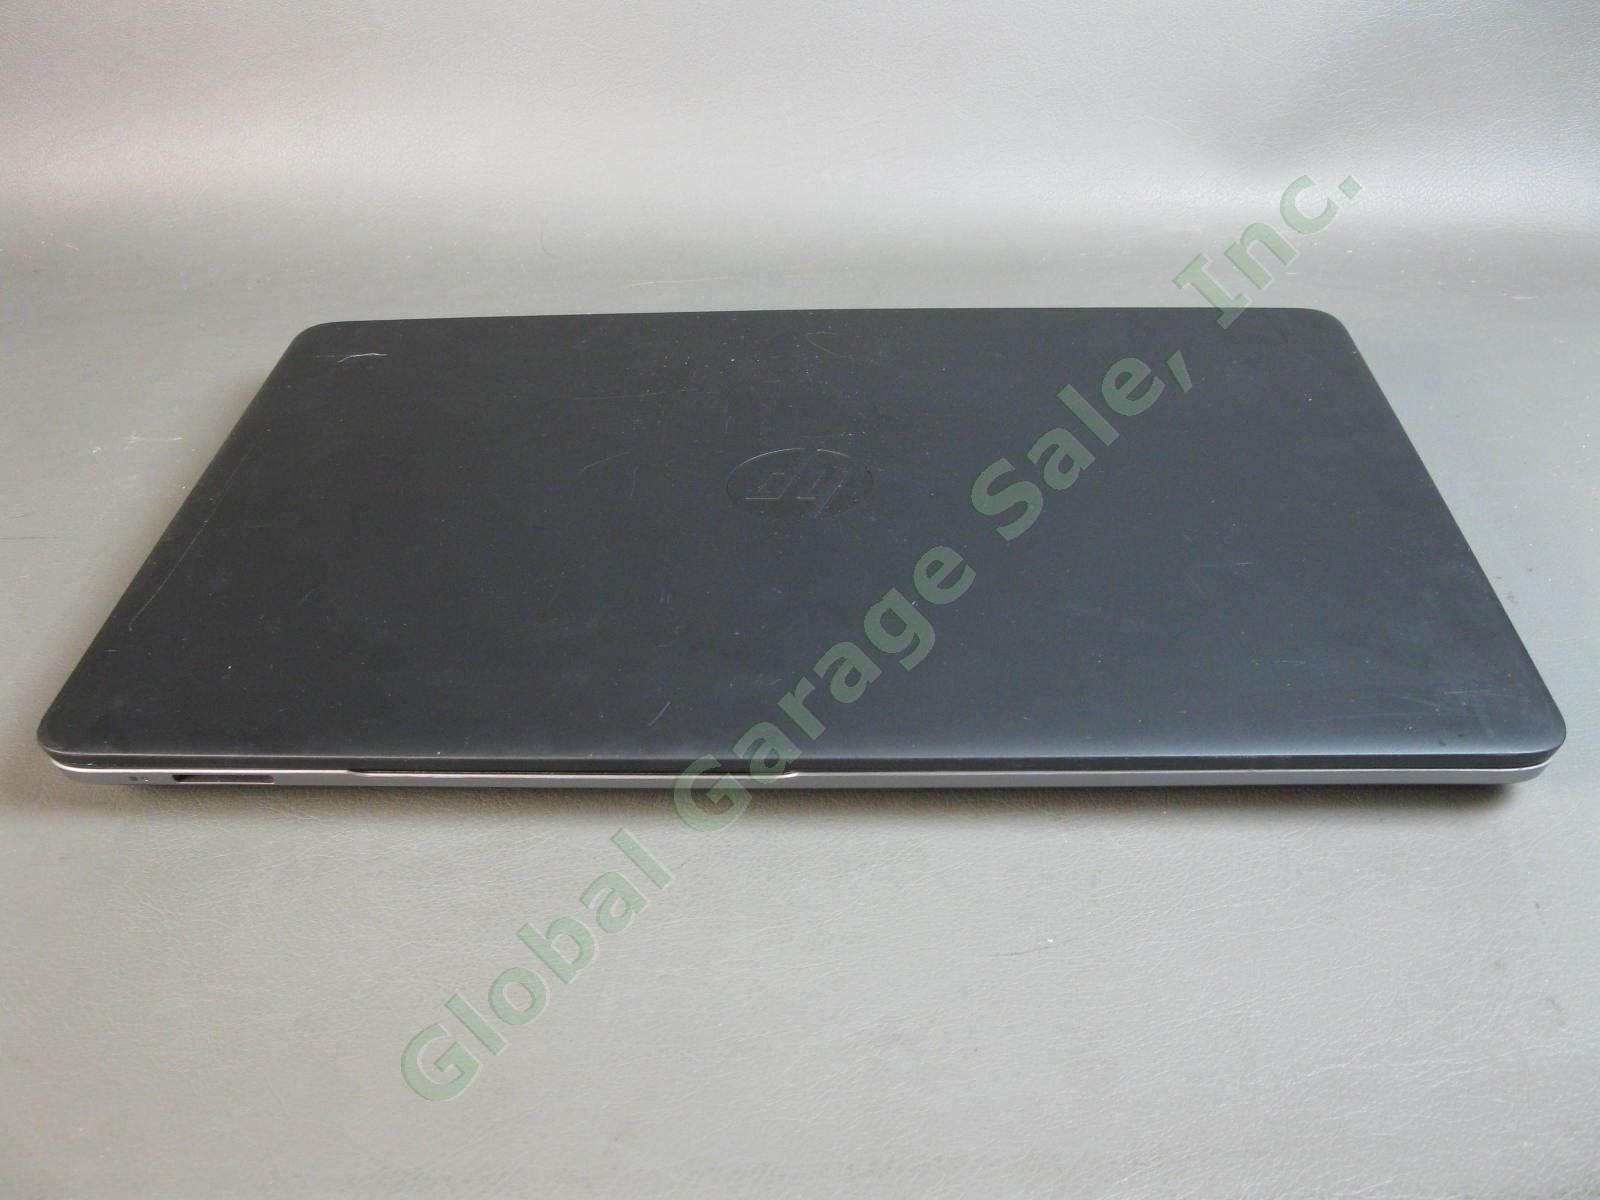 HP ProBook 450 G1 Laptop Computer i5-4200M 4GB 320GB Win10 WIFI DVD Webcam Power 3